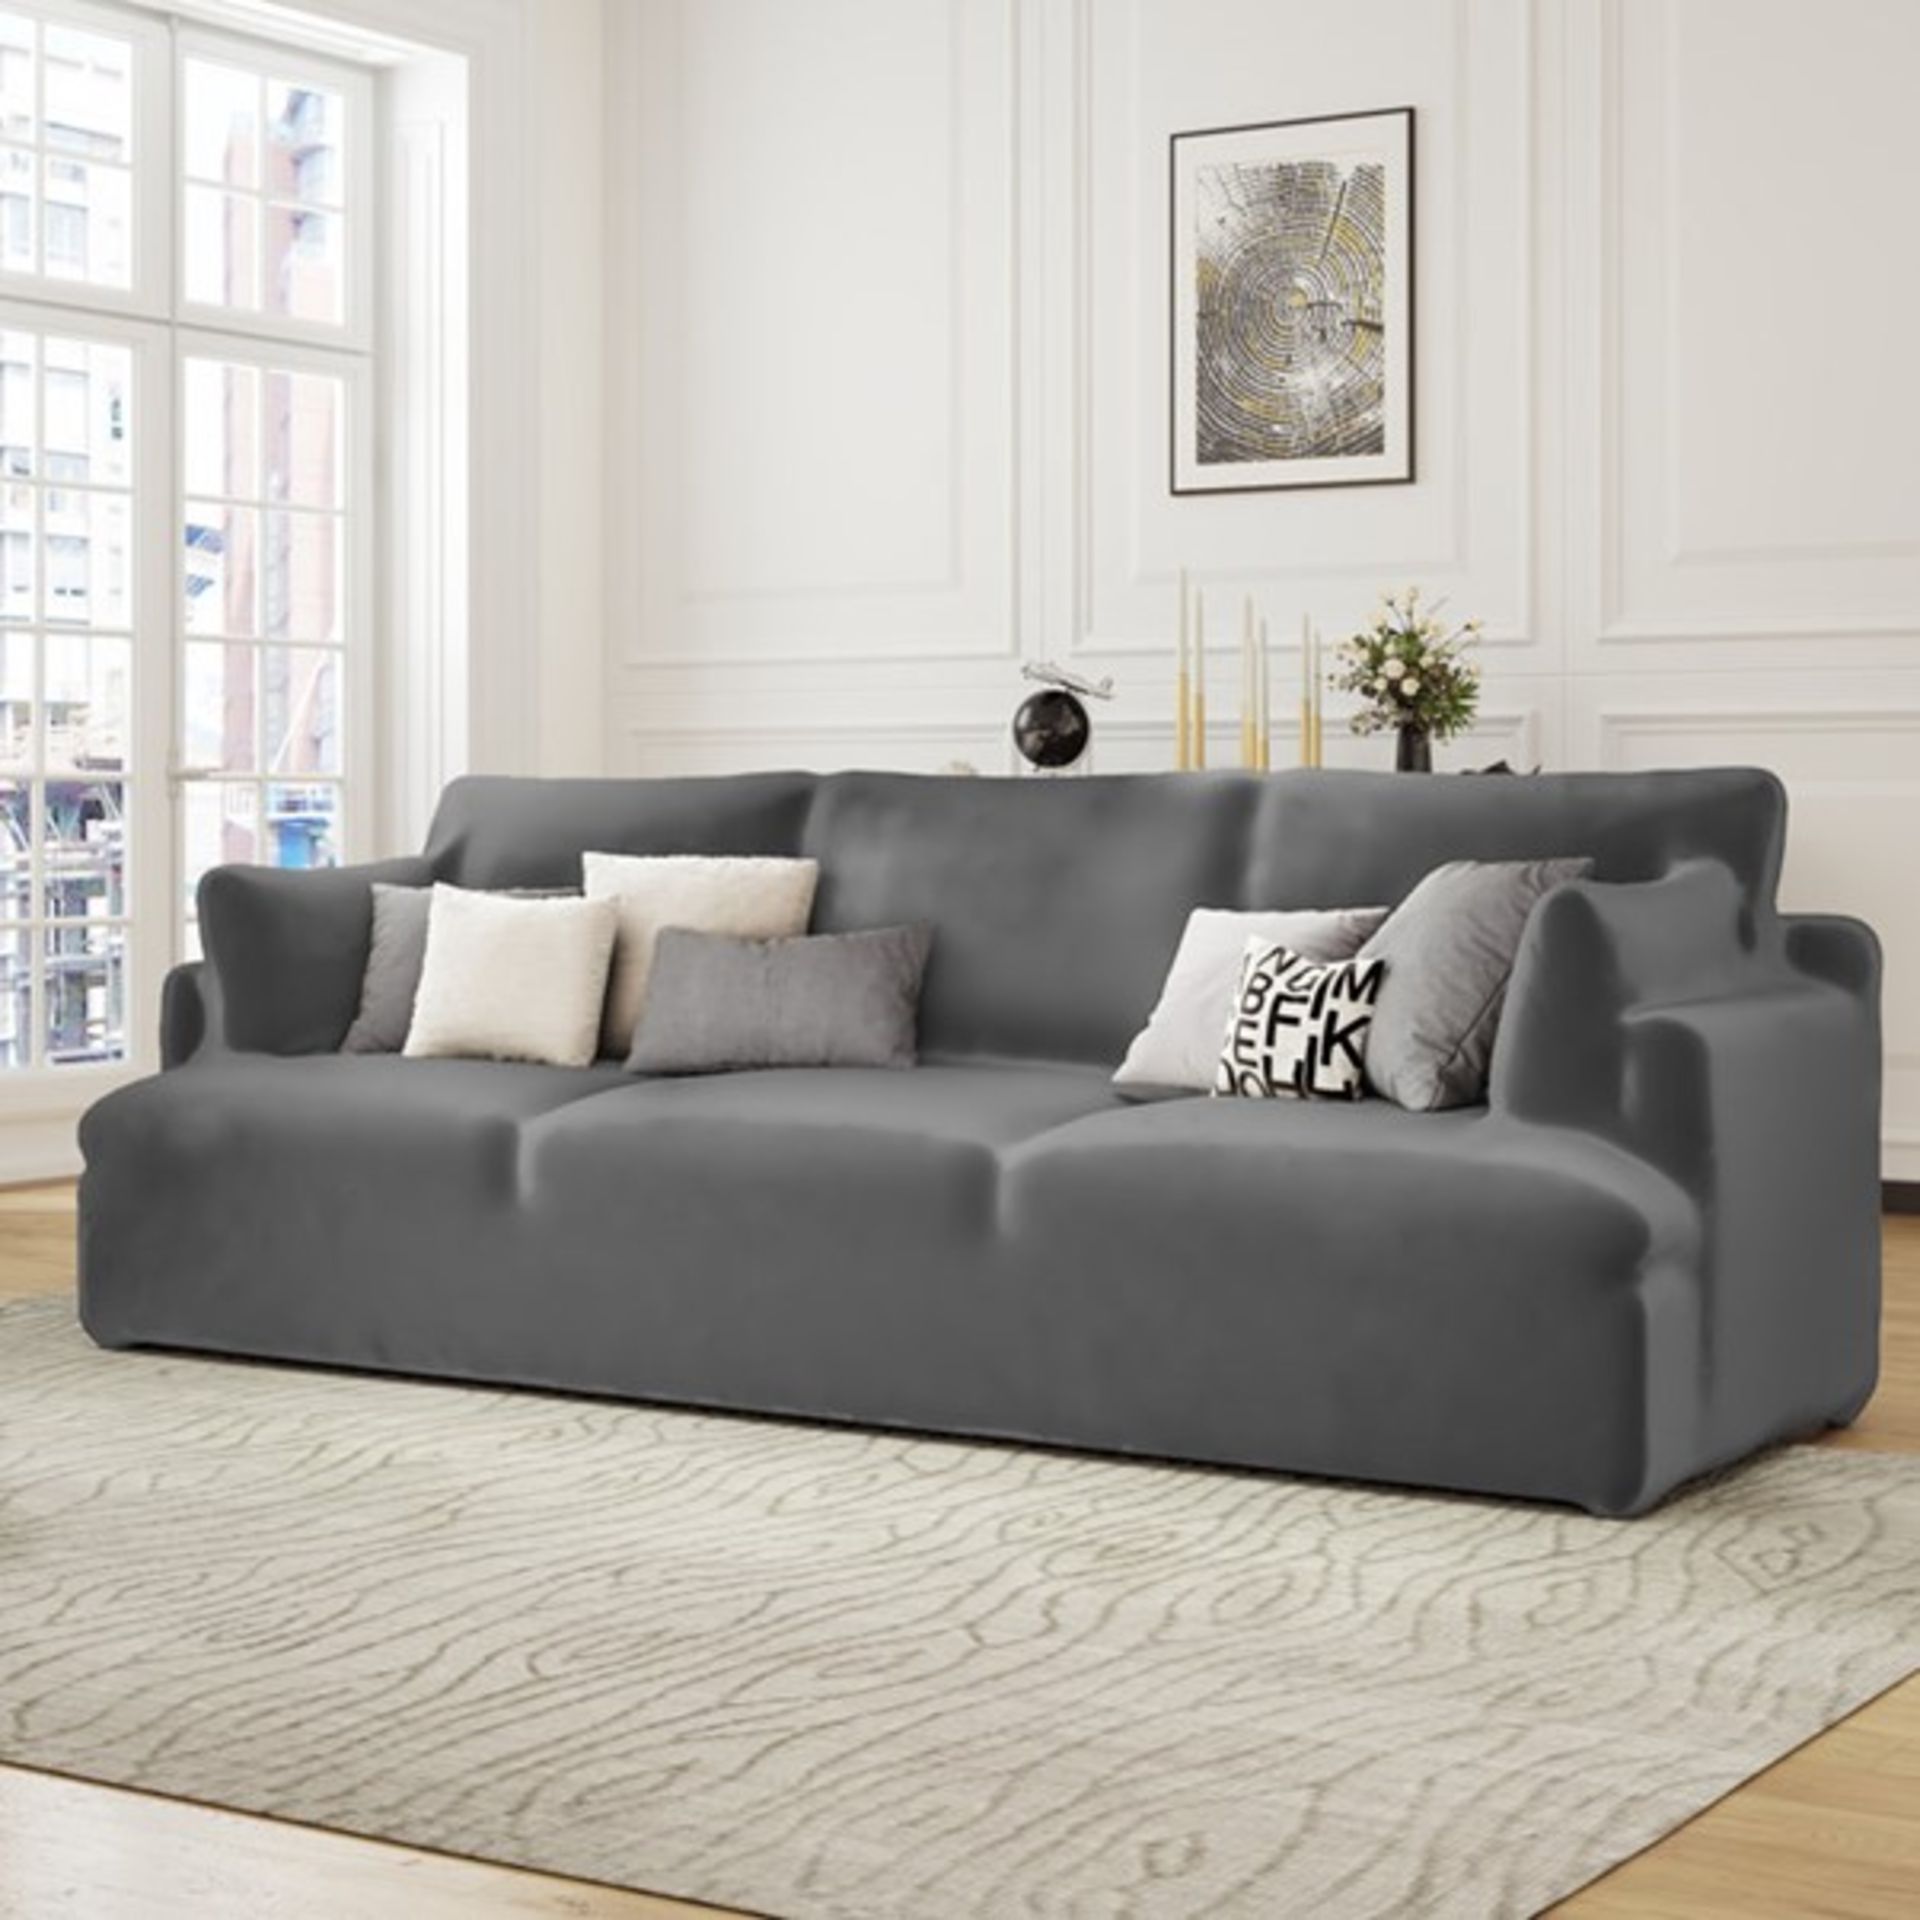 RRP £28.99 - 3 Seater Sofa Cover With Extendable Armrest - 0.39cm H x 90cm W x 76.77cm D